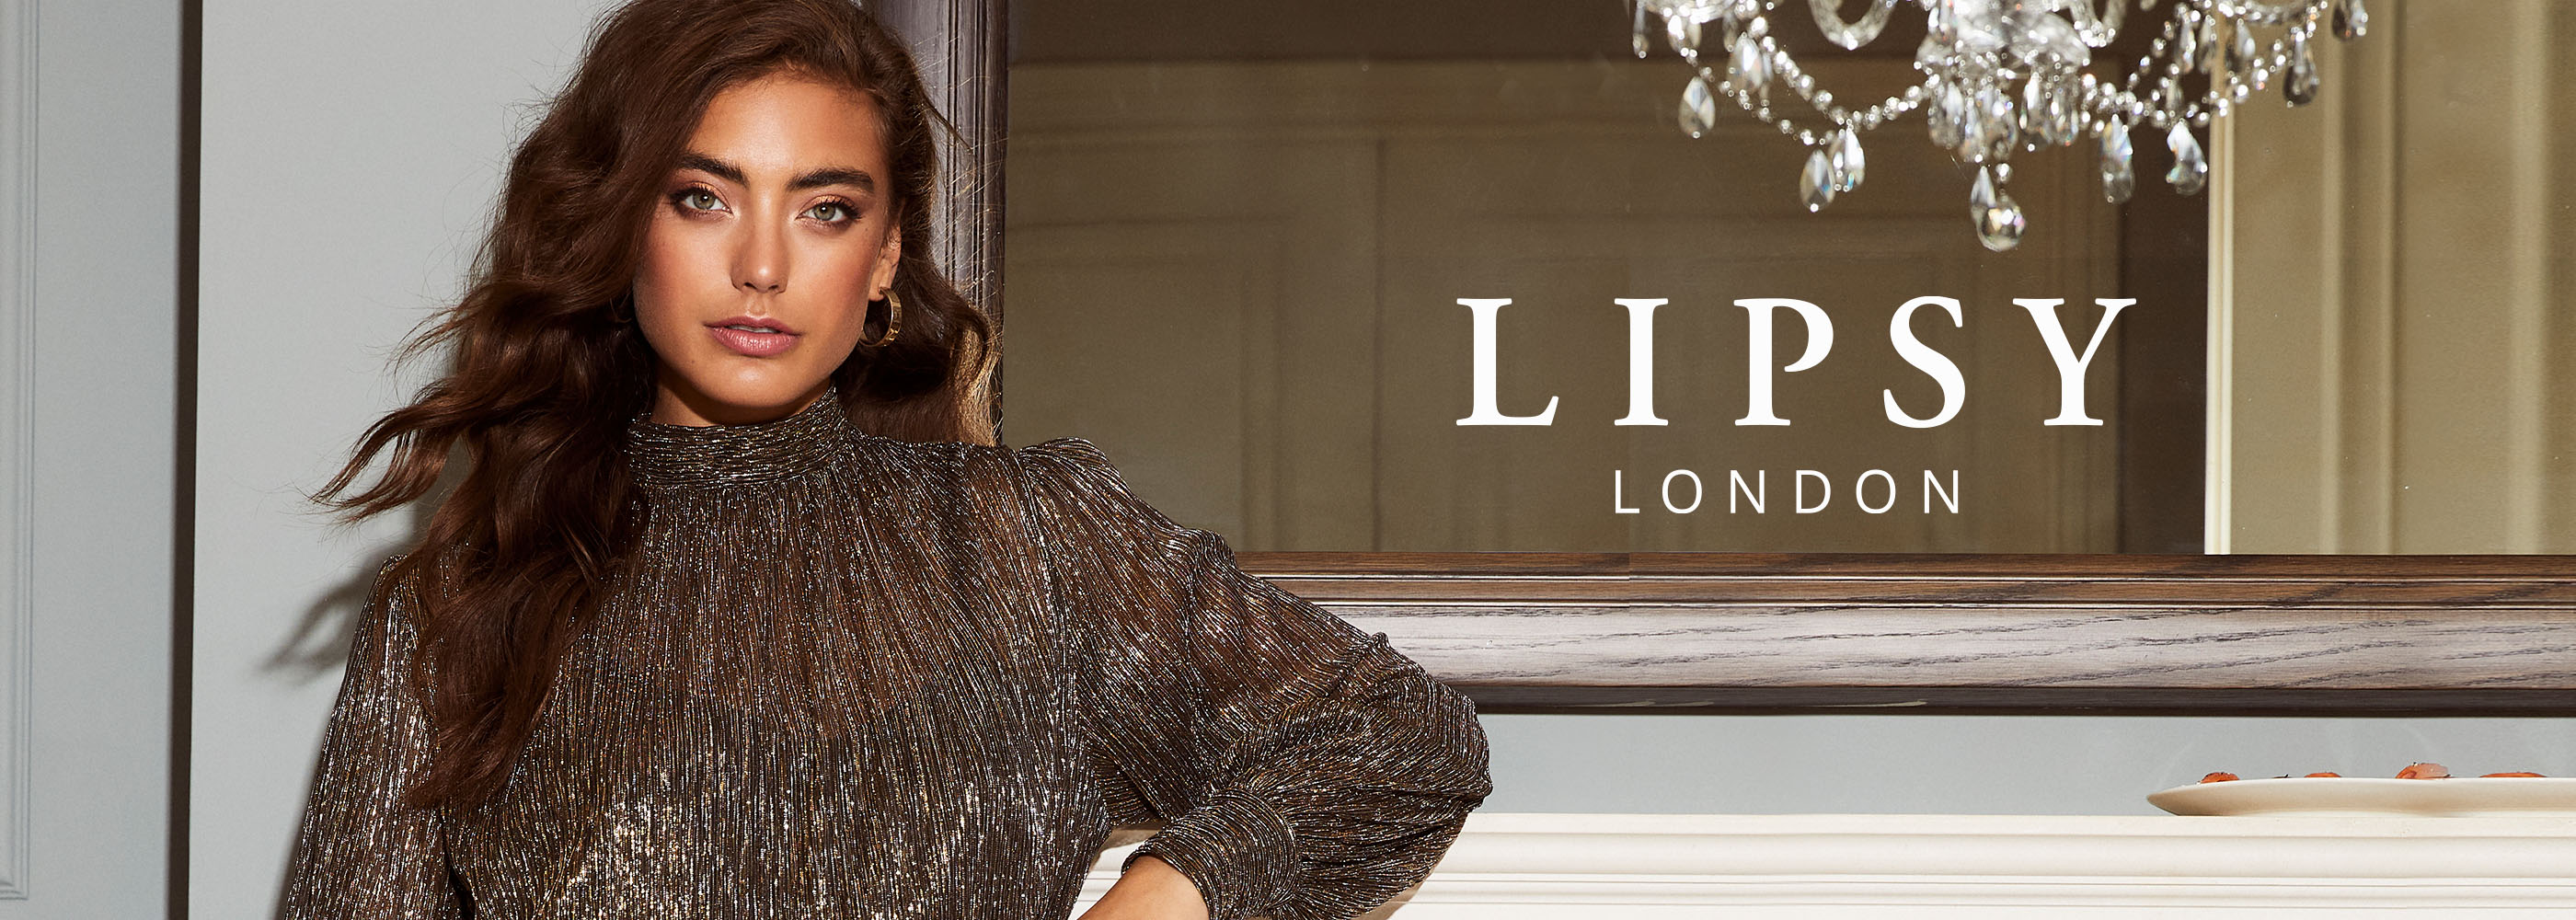 Lipsy London Collection | New Season ...